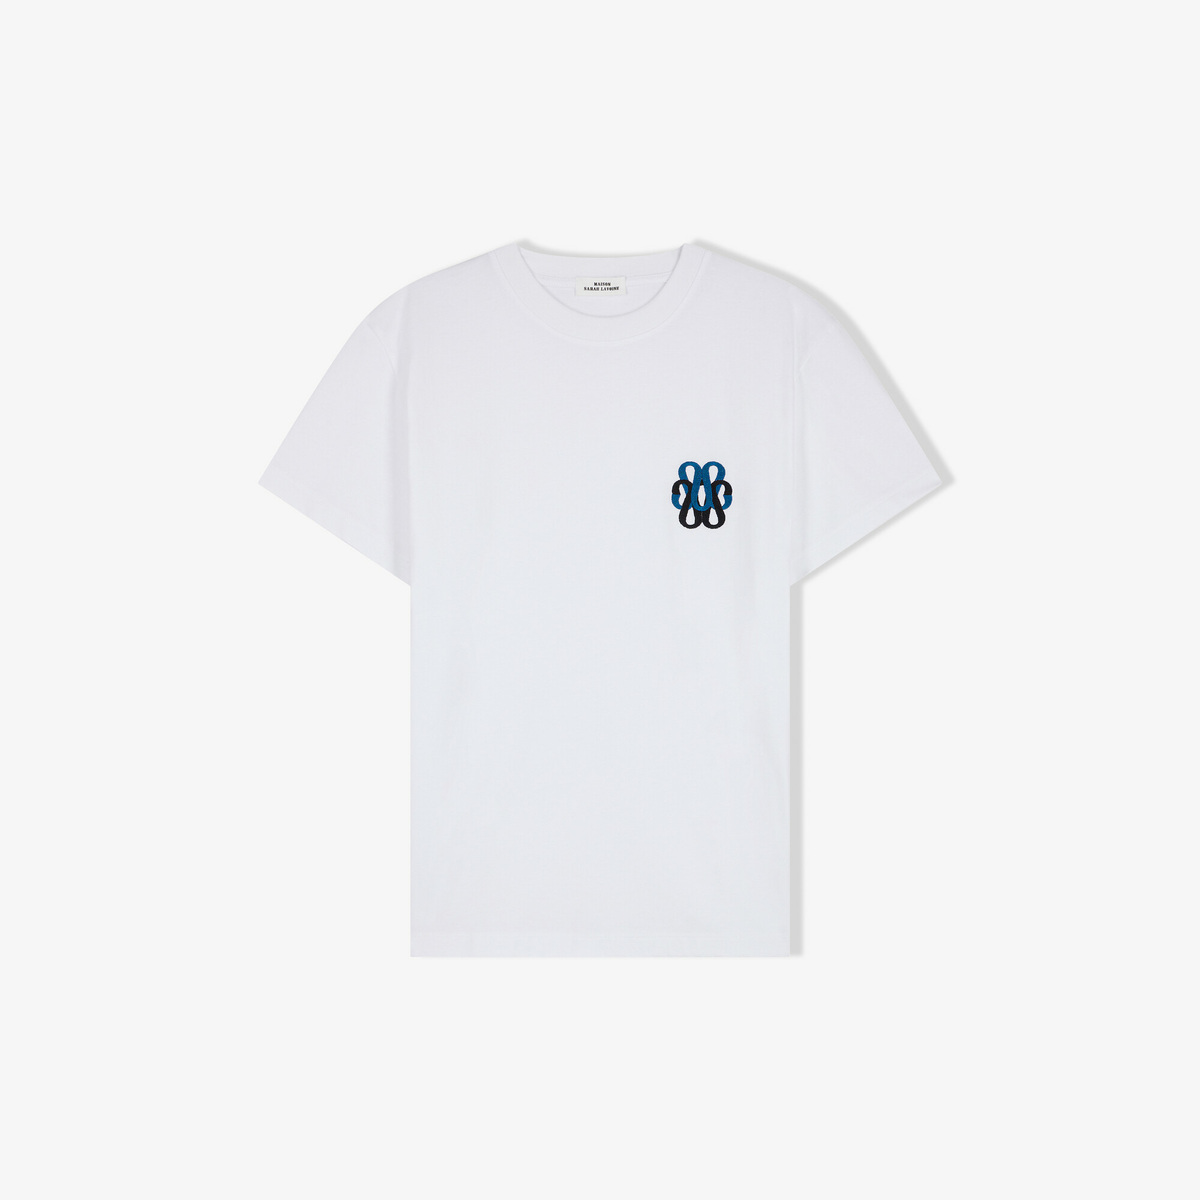 Monogram T-shirt, White - Round Neck - 100% Cotton - image 1